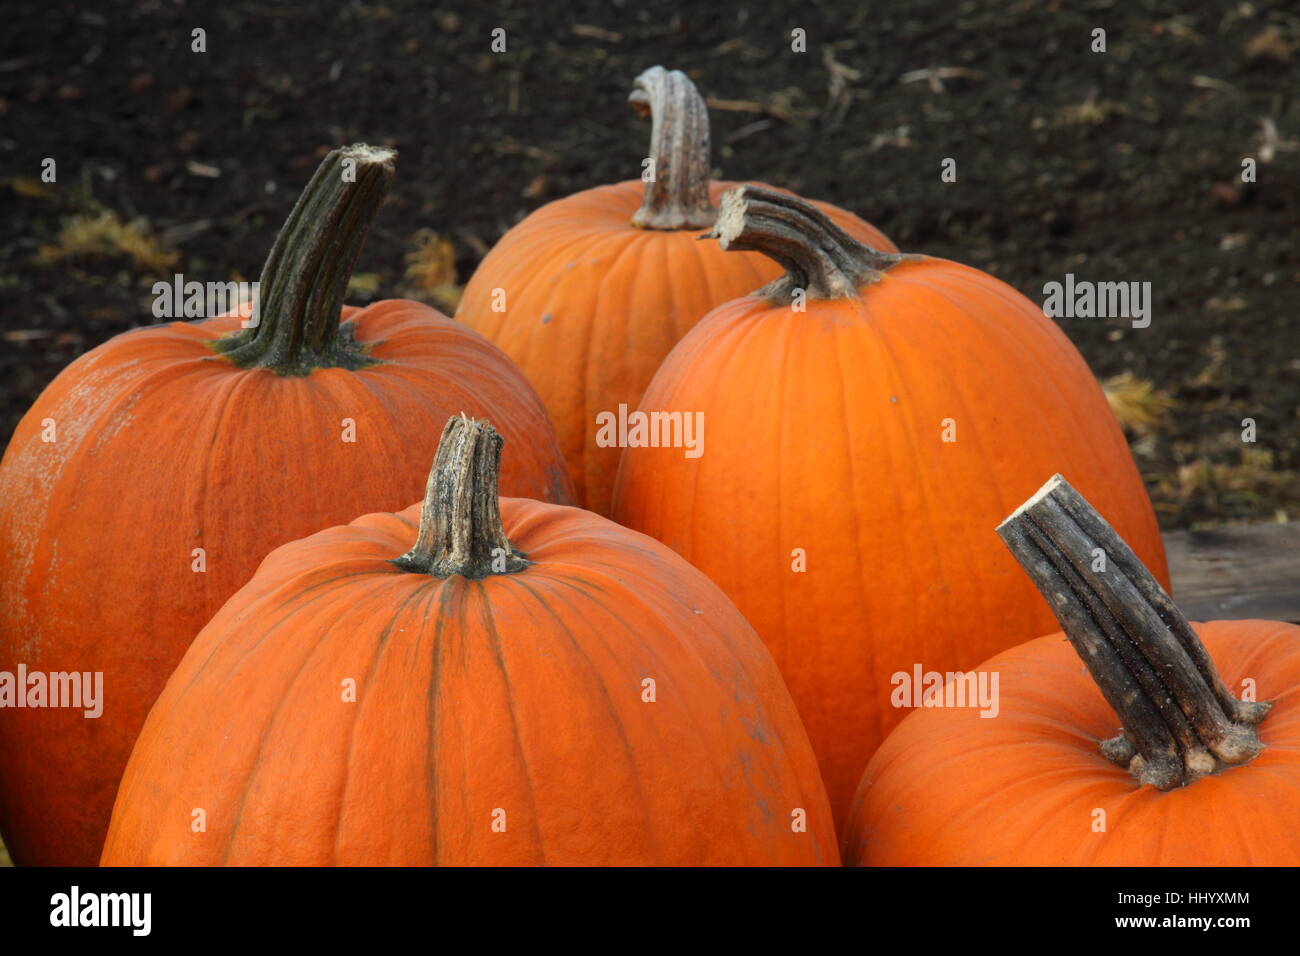 field, acre, vegetable, halloween, cucurbits, pumpkin, orange, agriculture, Stock Photo